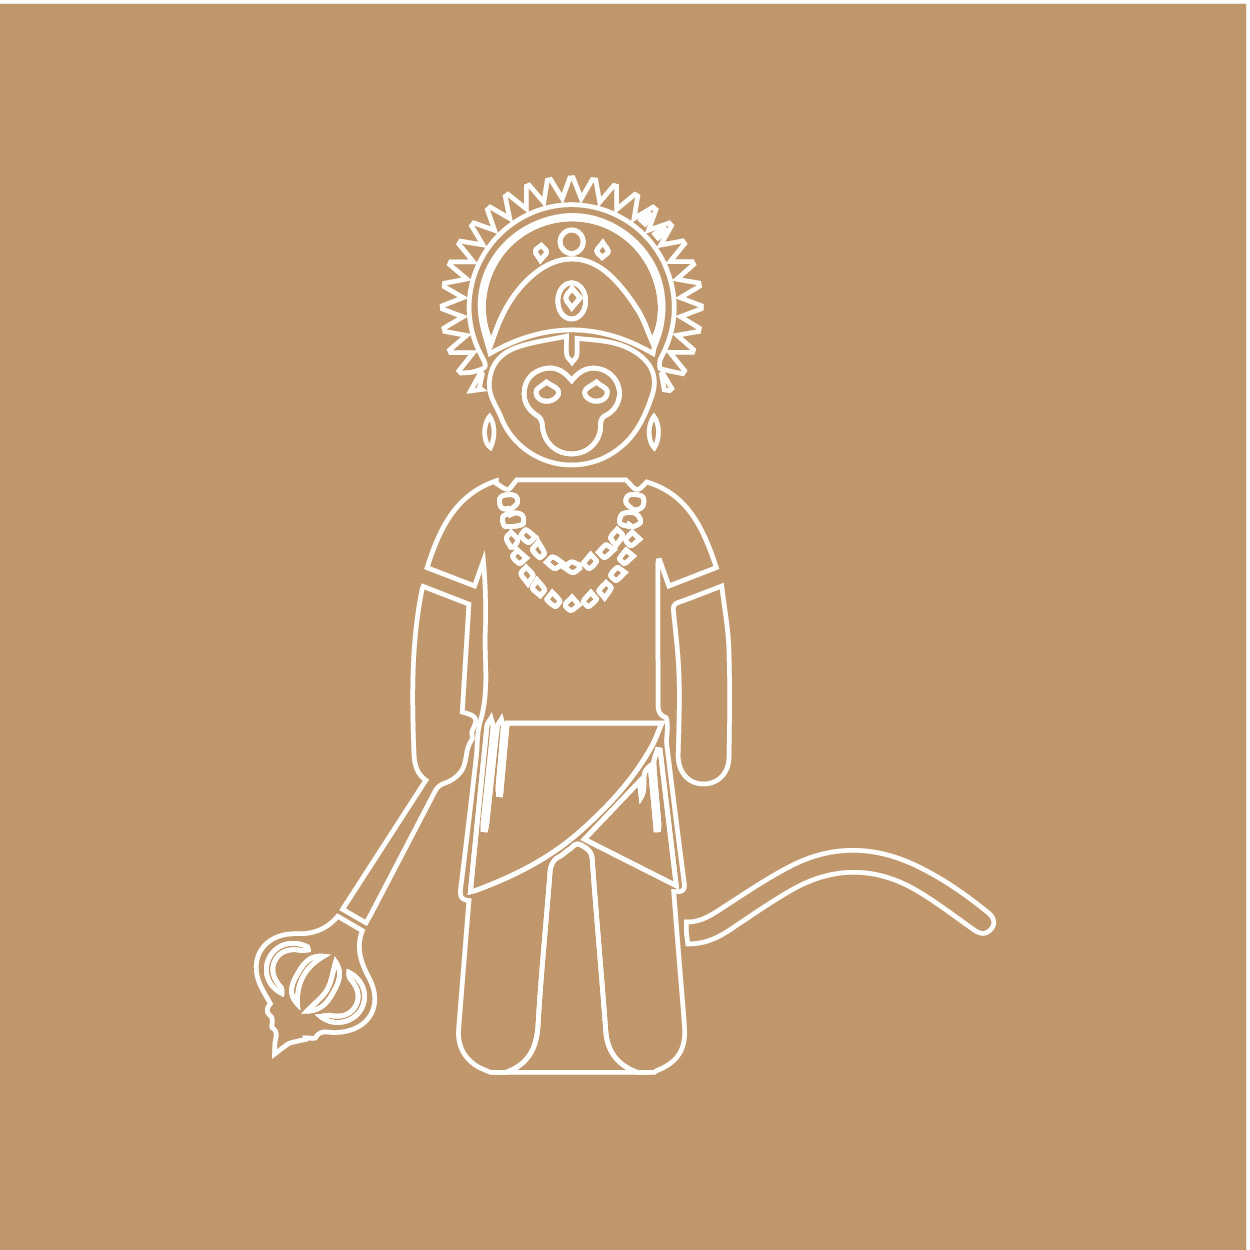 Hanuman Jayanti image